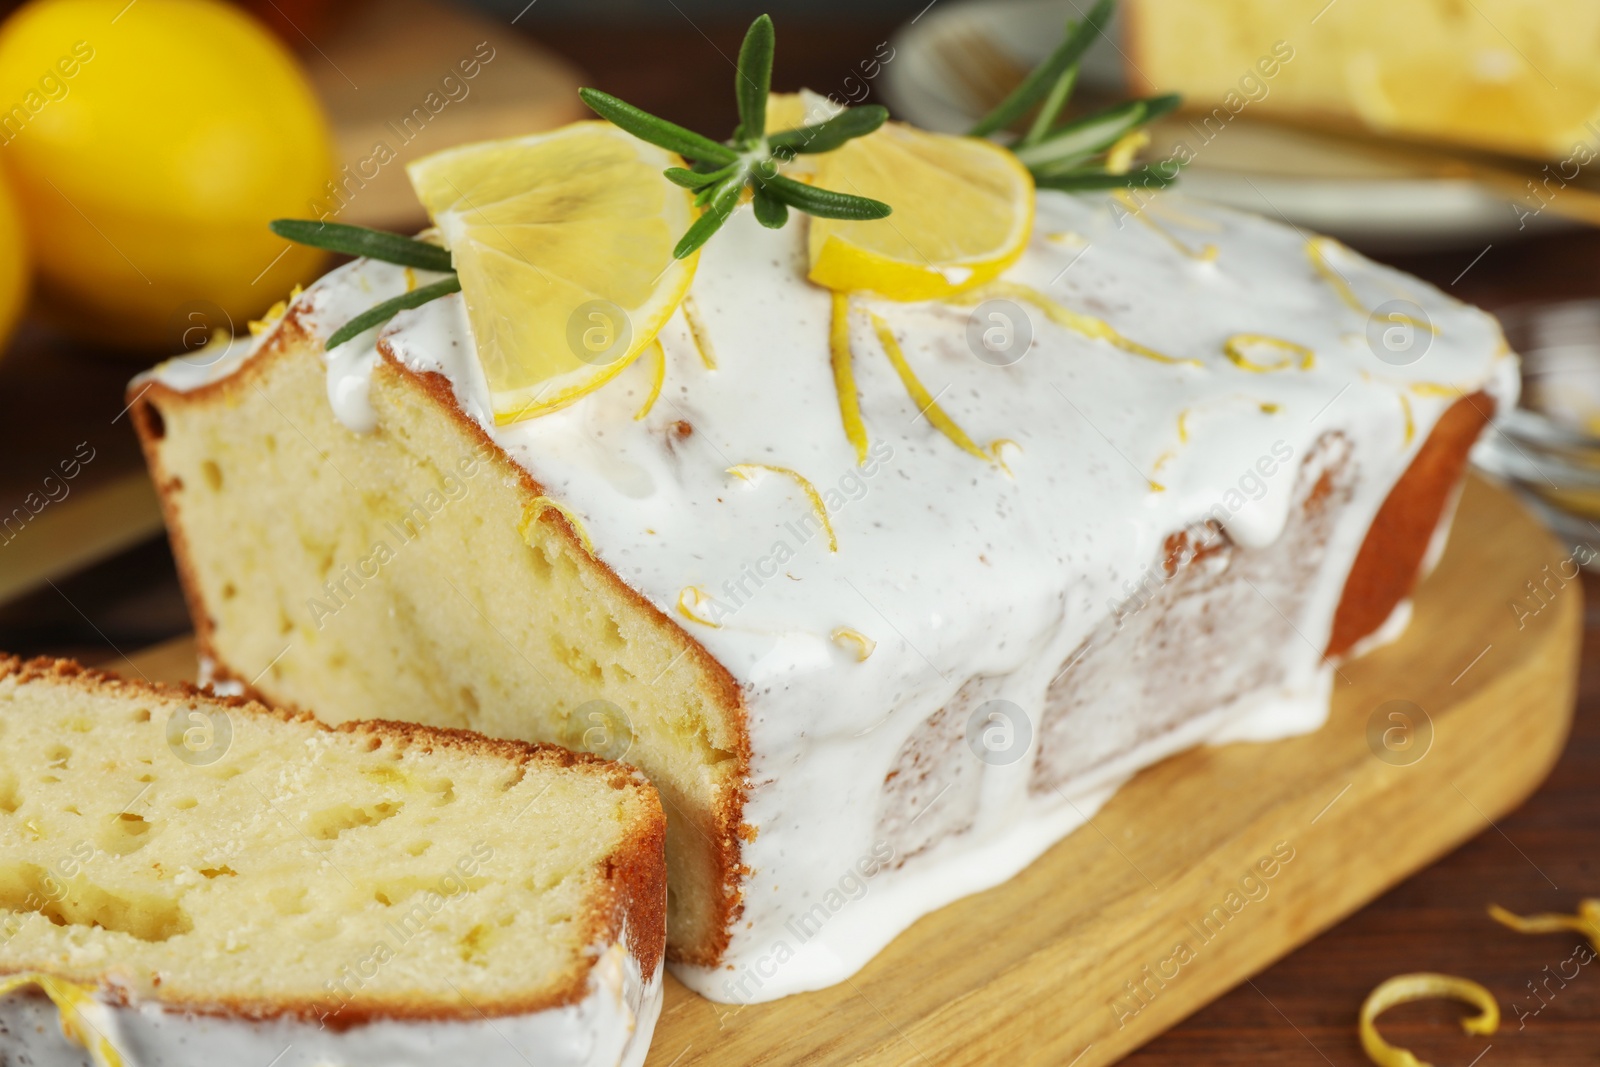 Photo of Tasty lemon cake with glaze on table, closeup